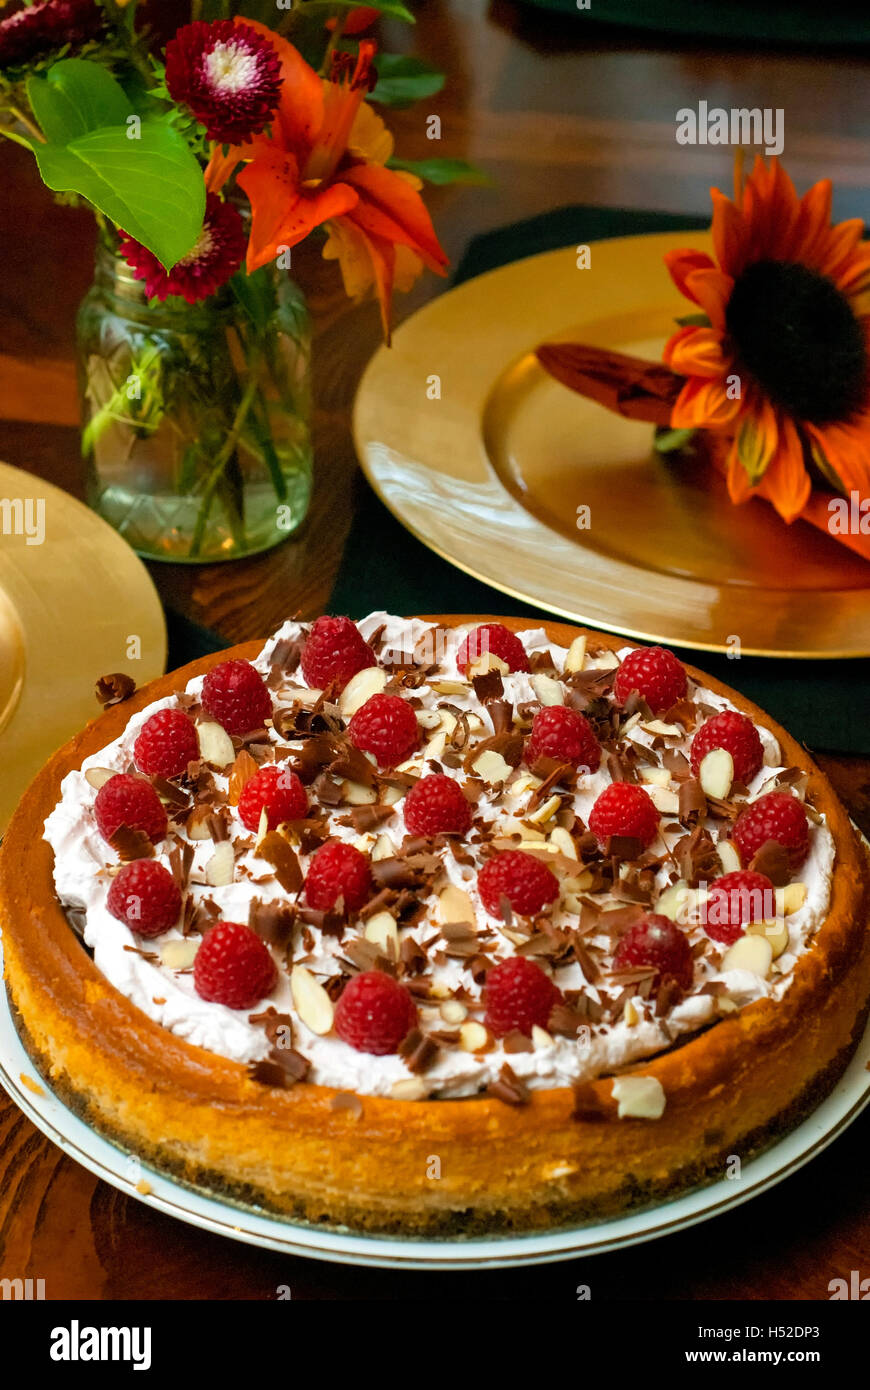 Raspberry chocolate cheesecake on a Fall table setting Stock Photo